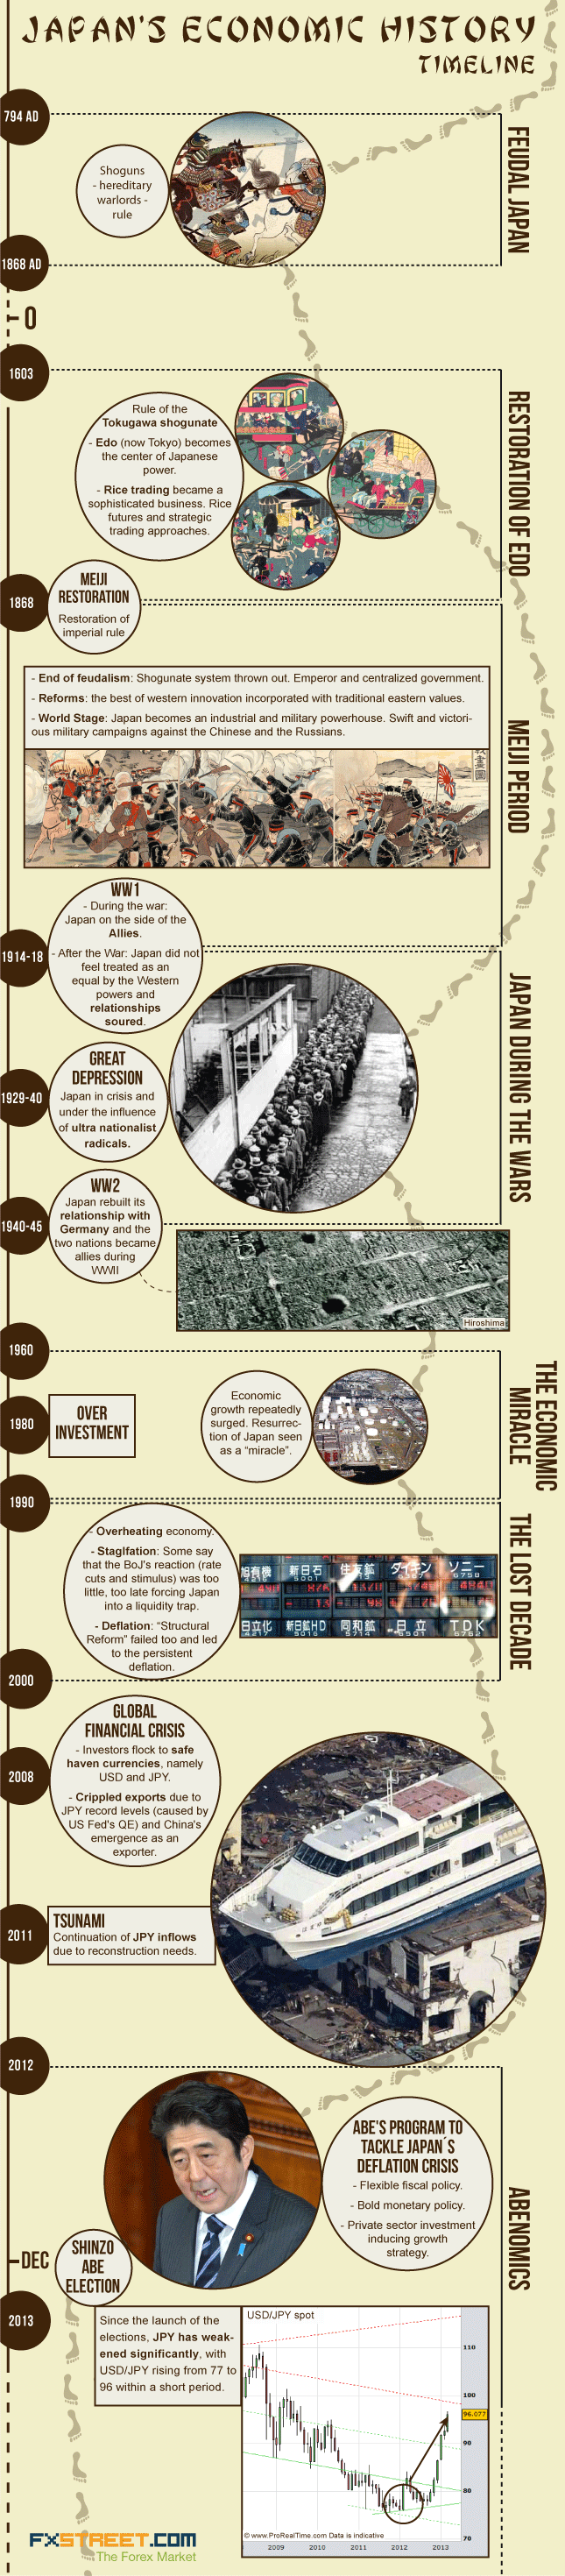 japan's economic history timeline